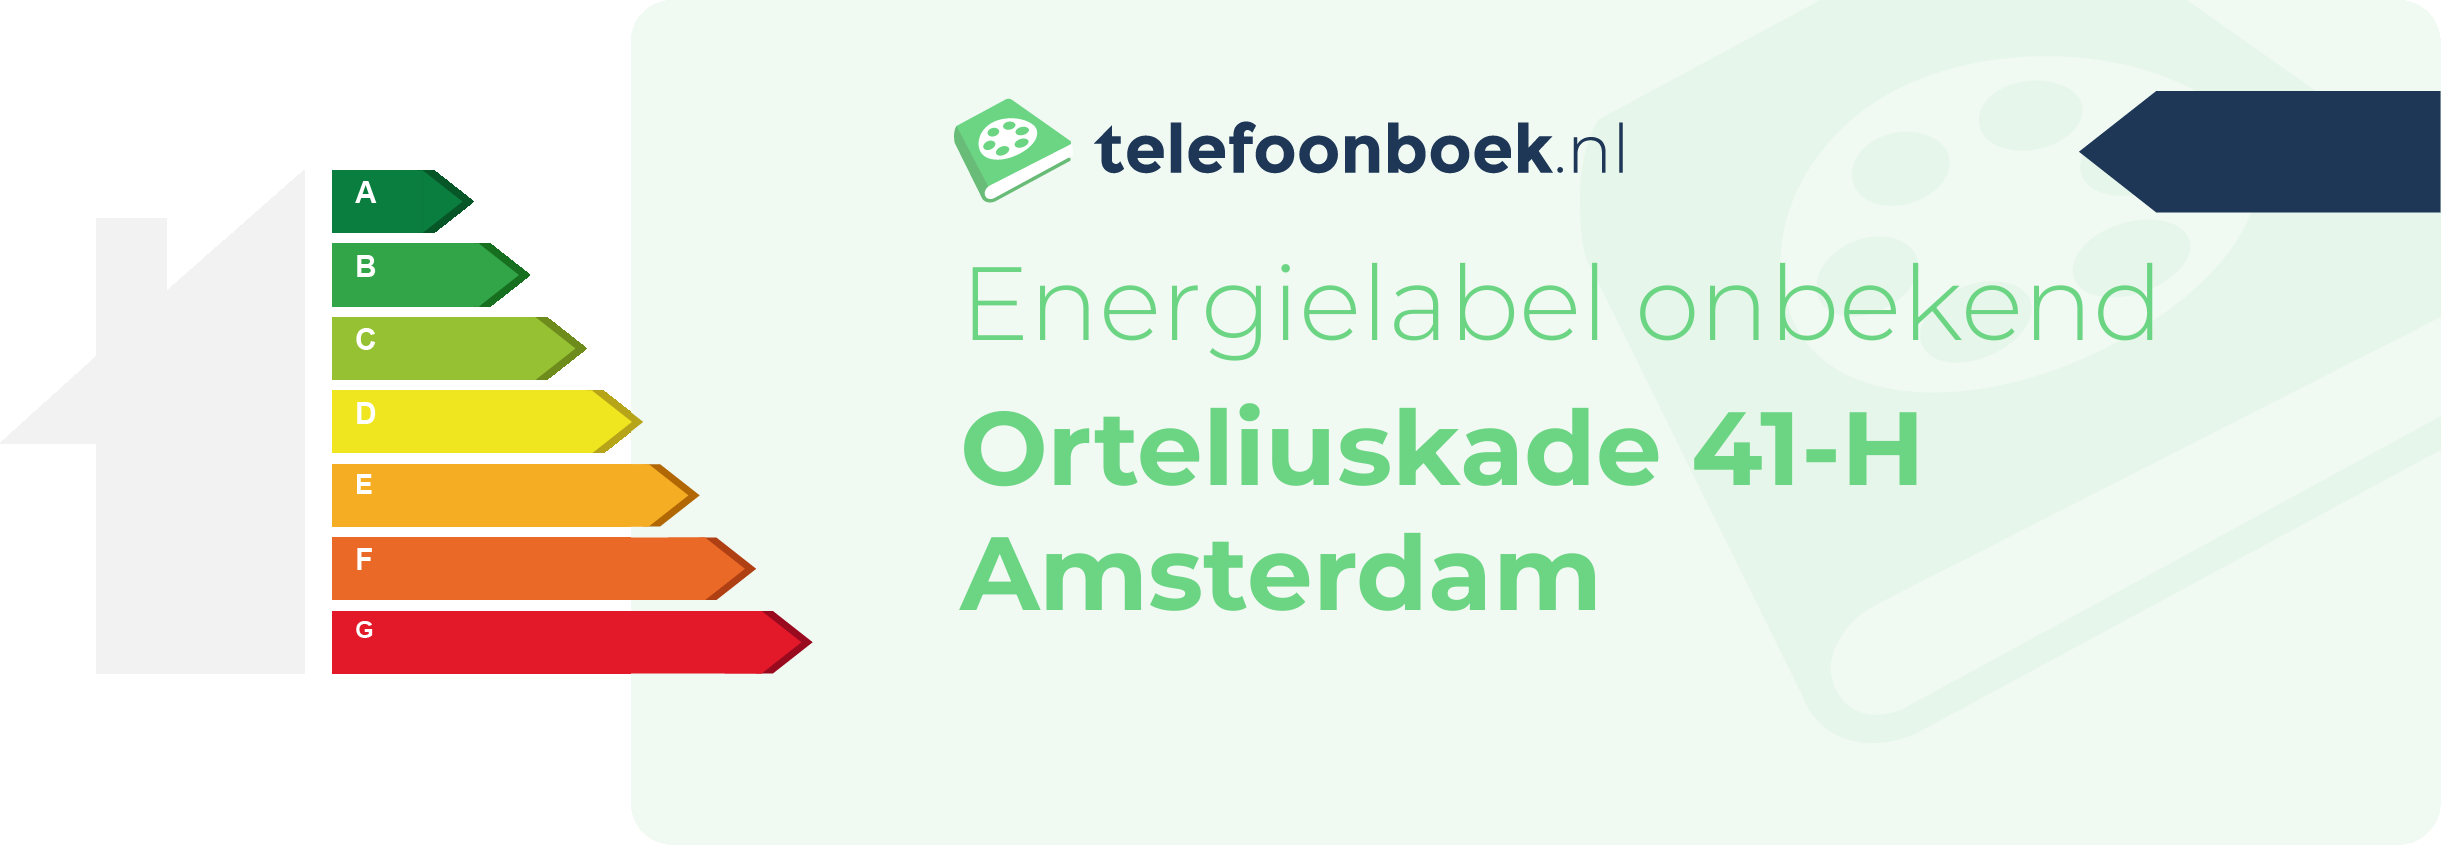 Energielabel Orteliuskade 41-H Amsterdam